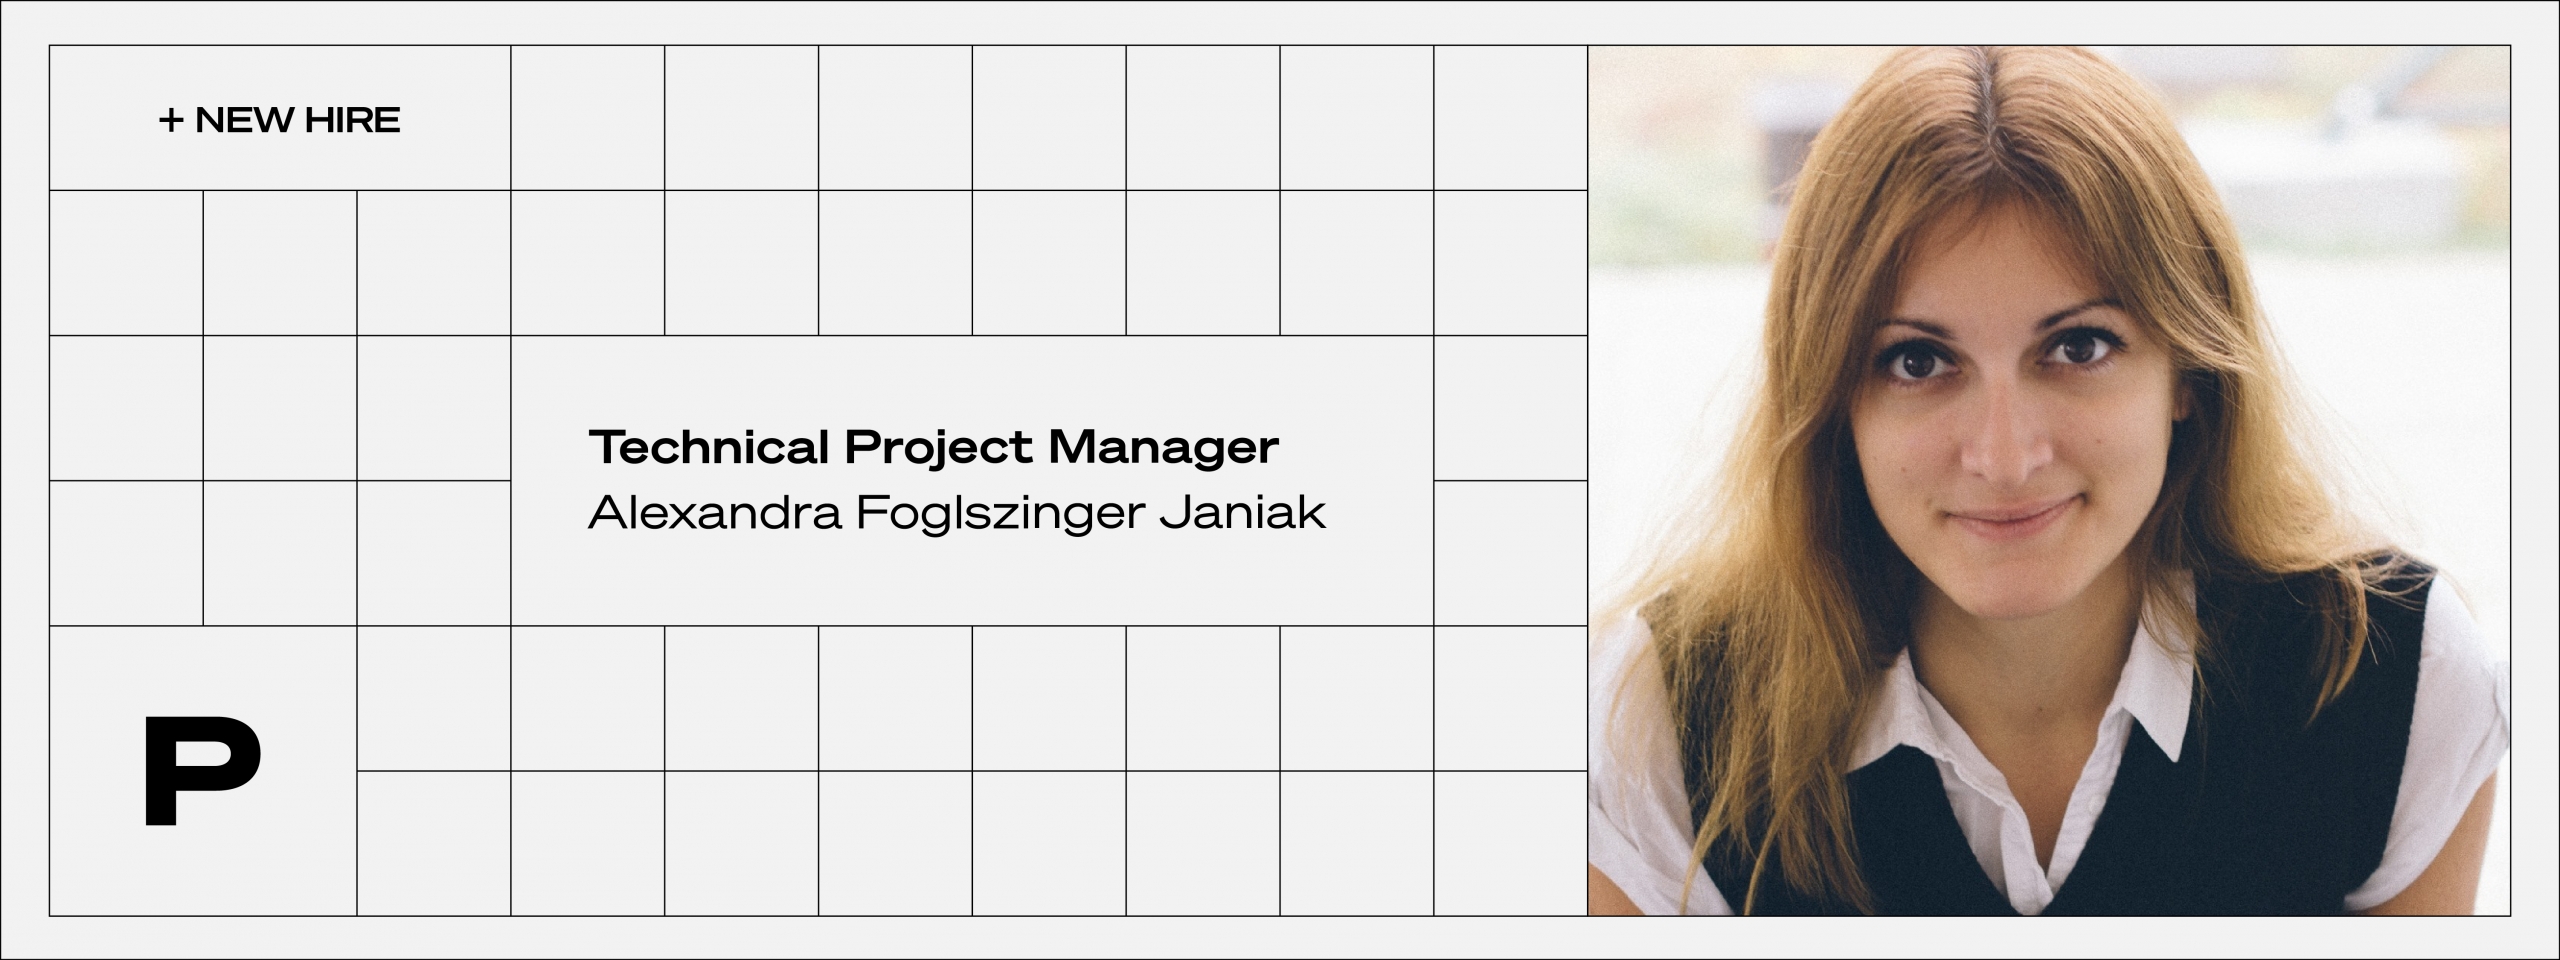 Pastilla Welcomes Alexandra Foglszinger Janiak as New Technical Project Manager